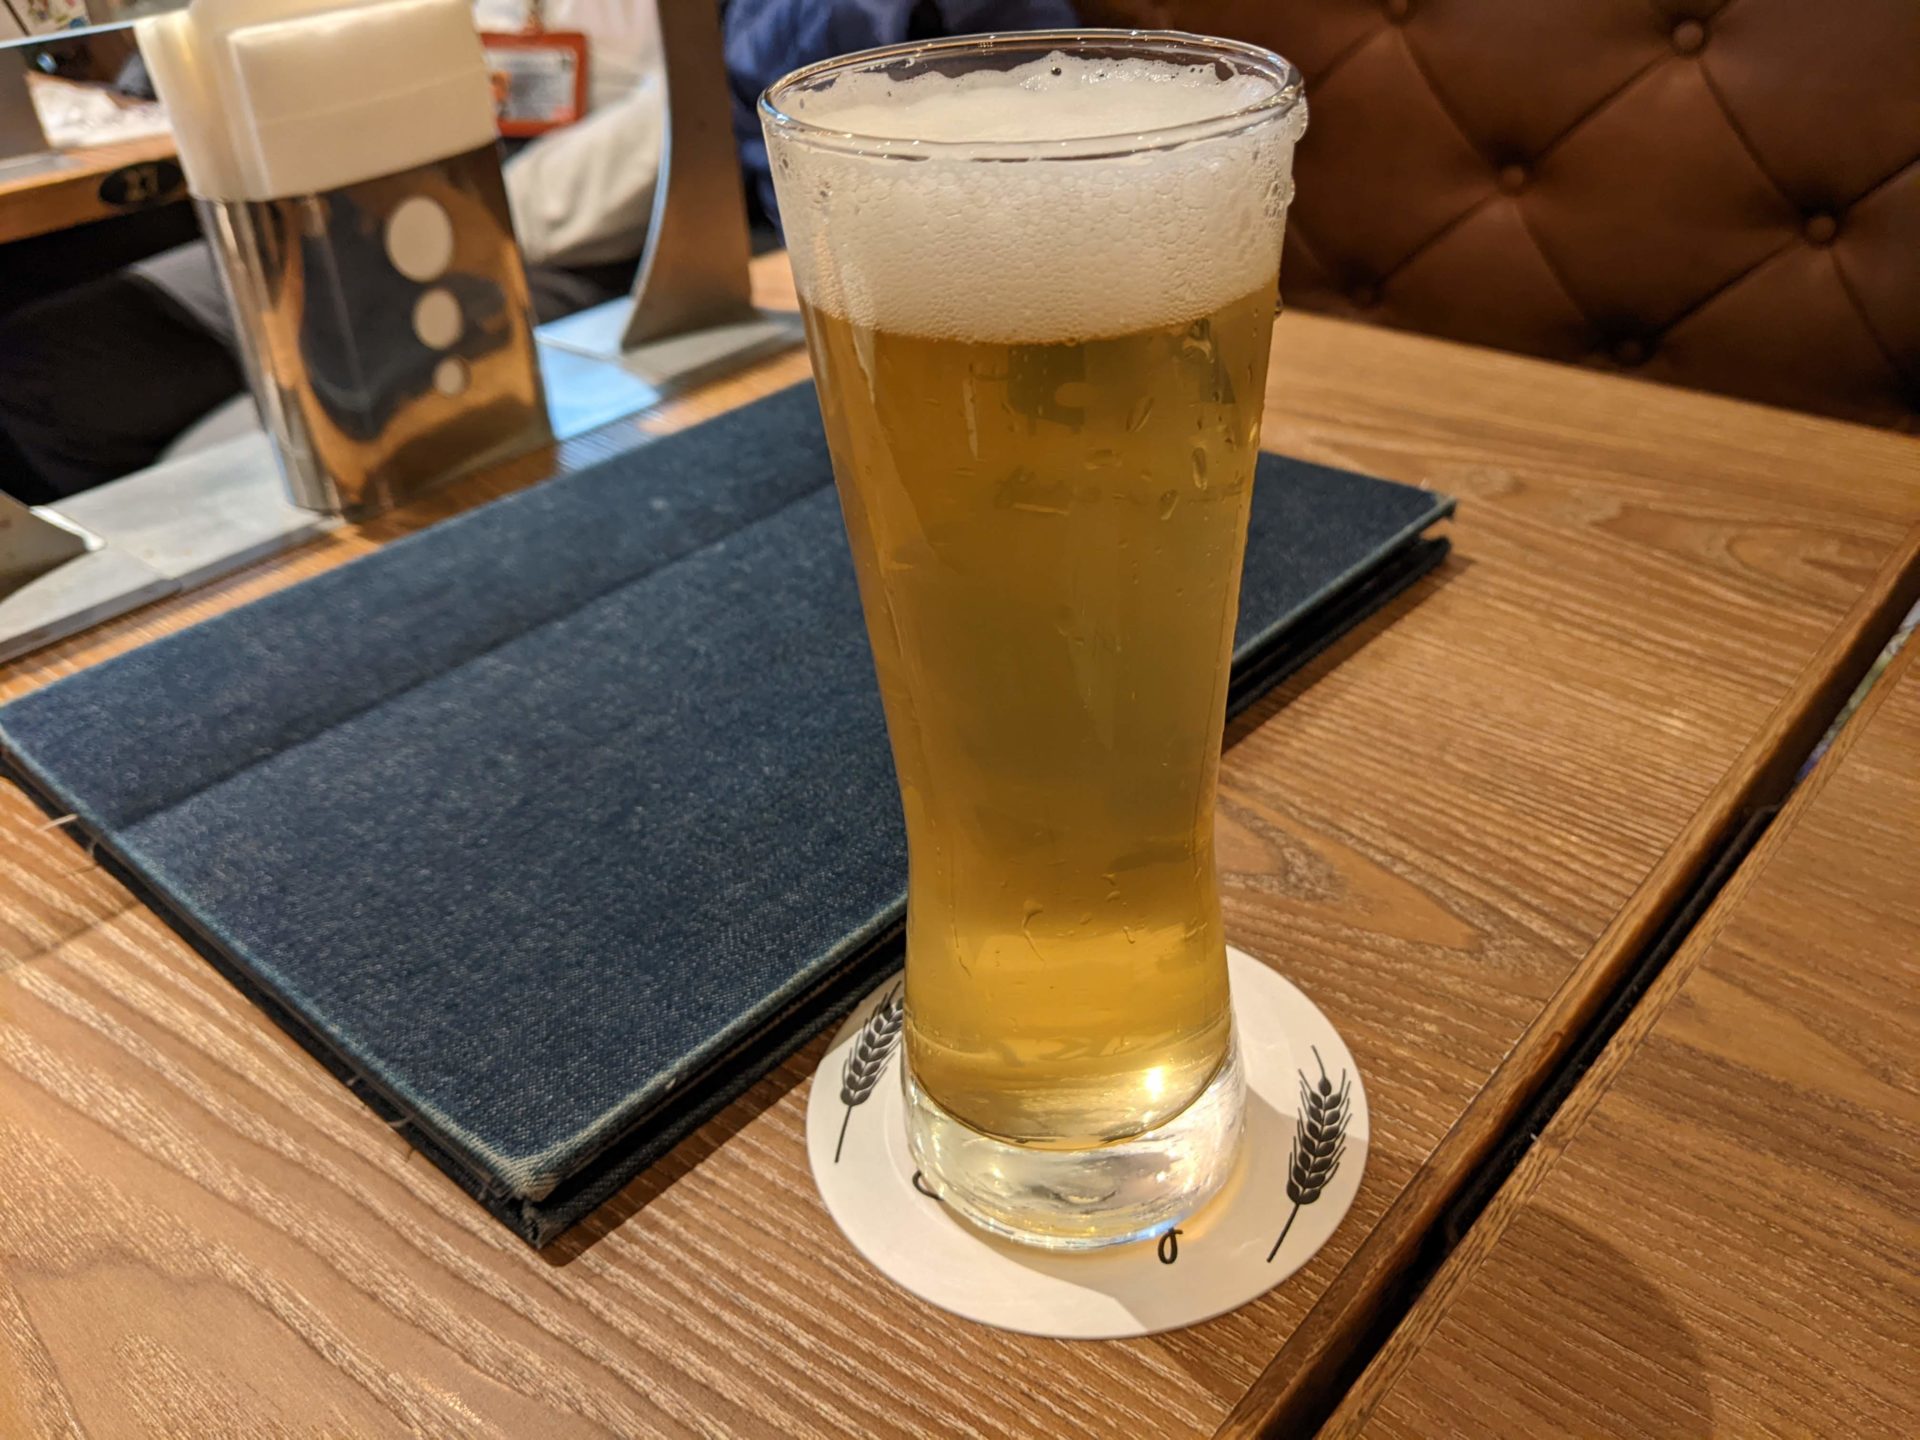 YAMATO Craft Beer